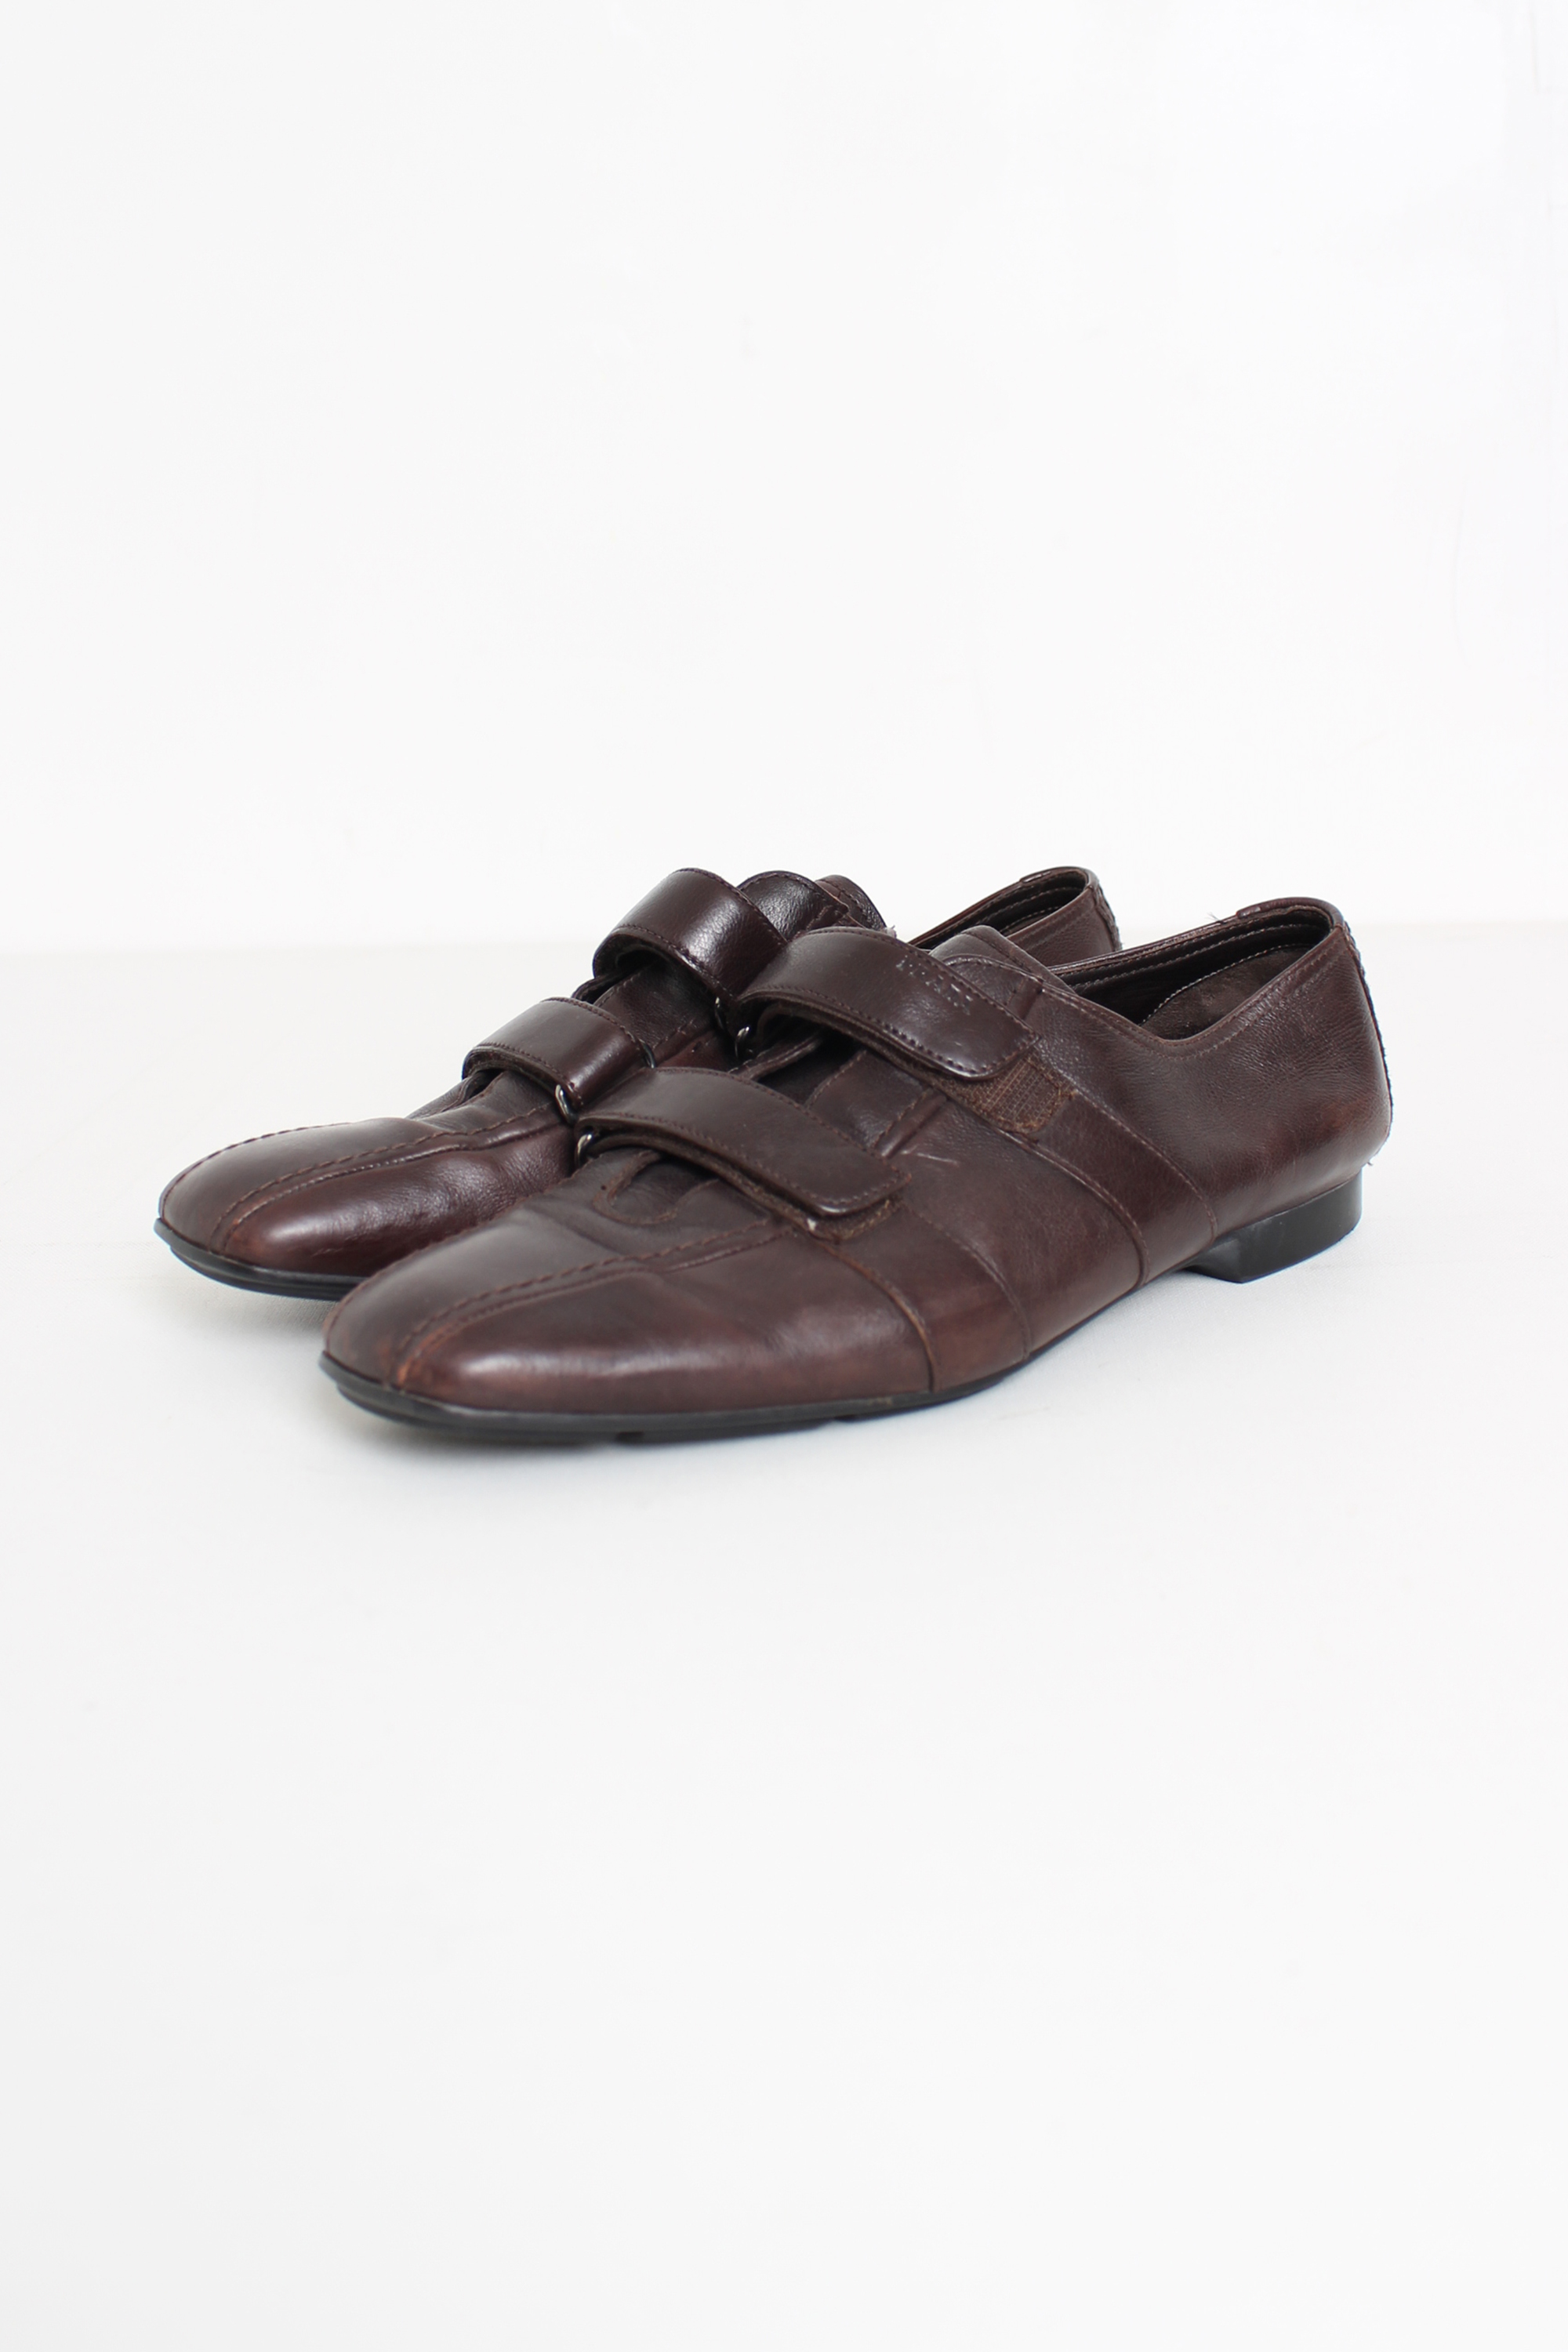 vintage PRADA velcro double strap shoes